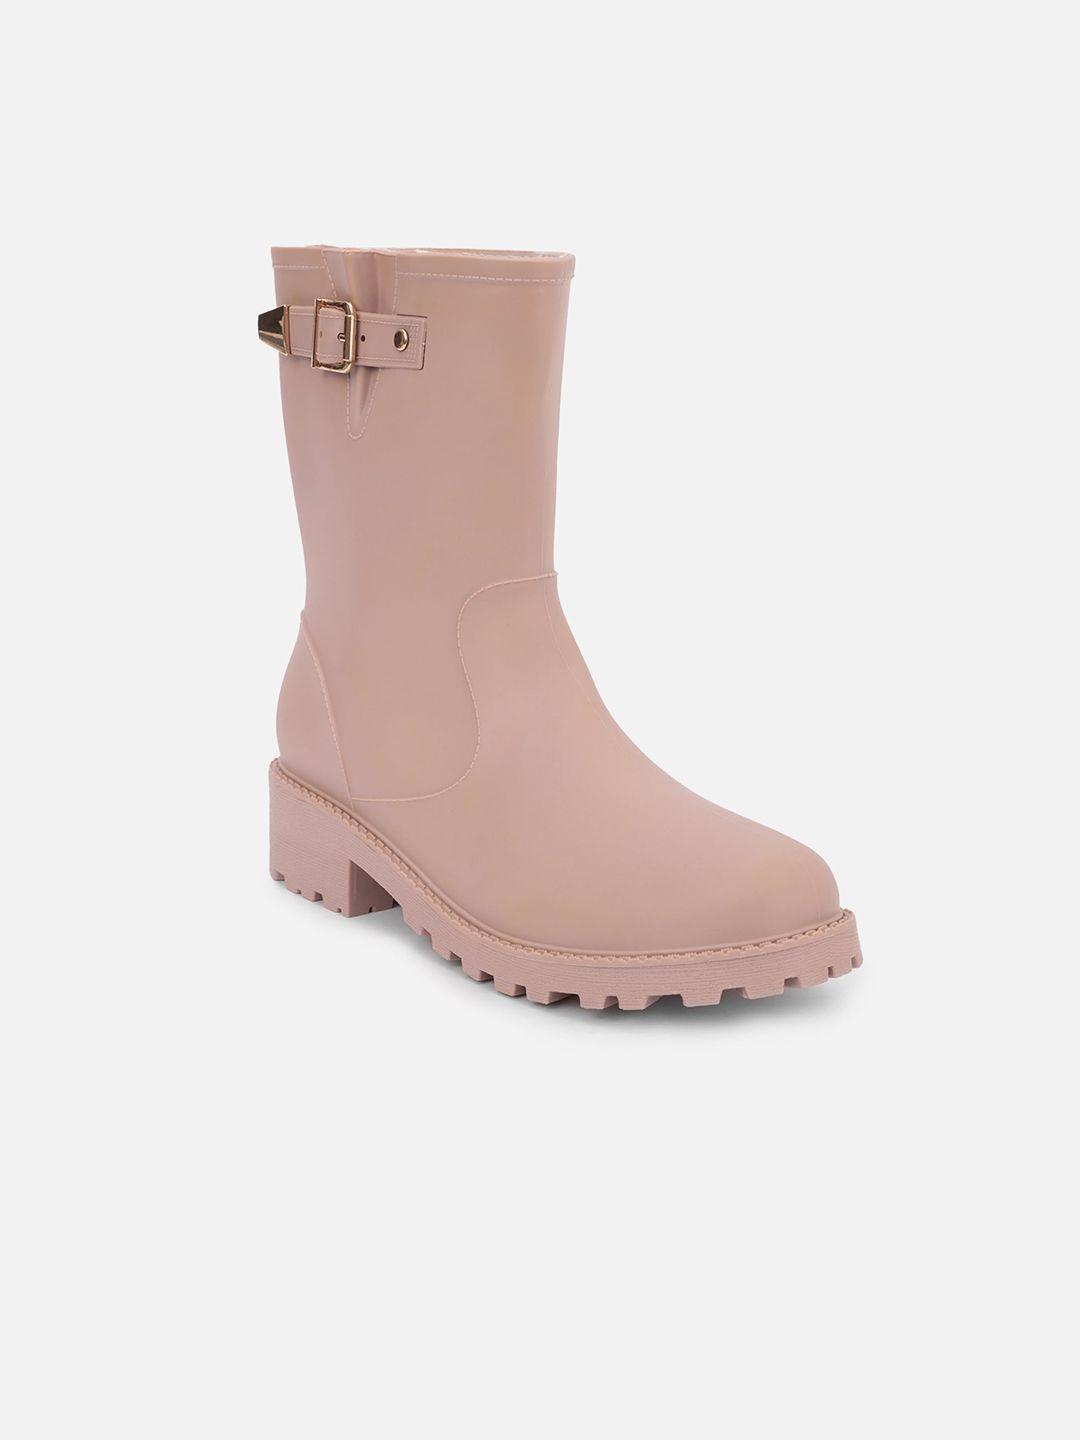 20dresses women pink ankle length rain boots